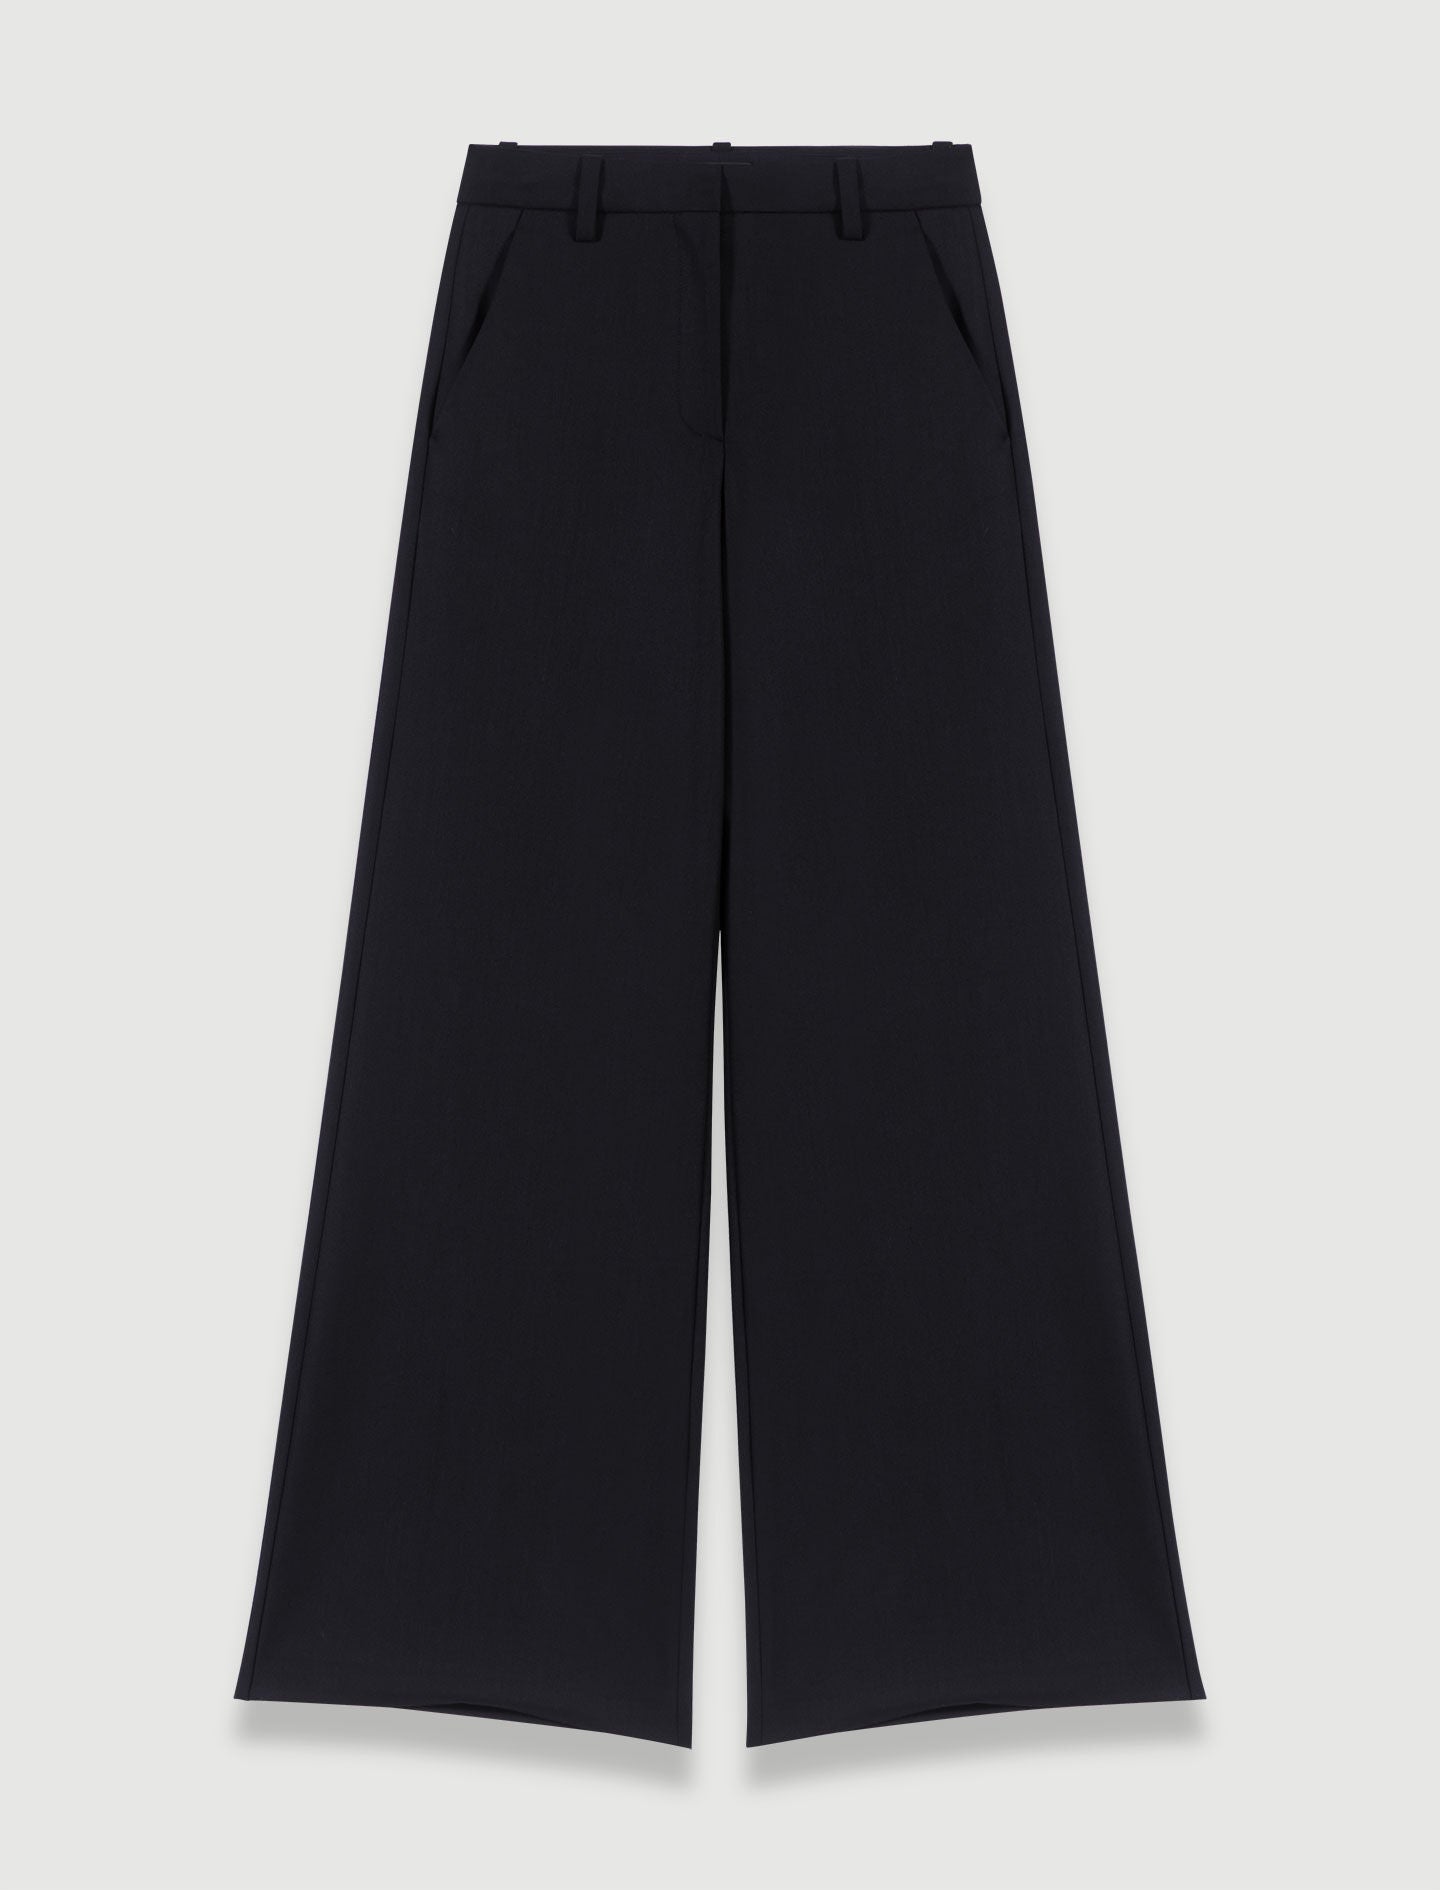 Black-flared trousers